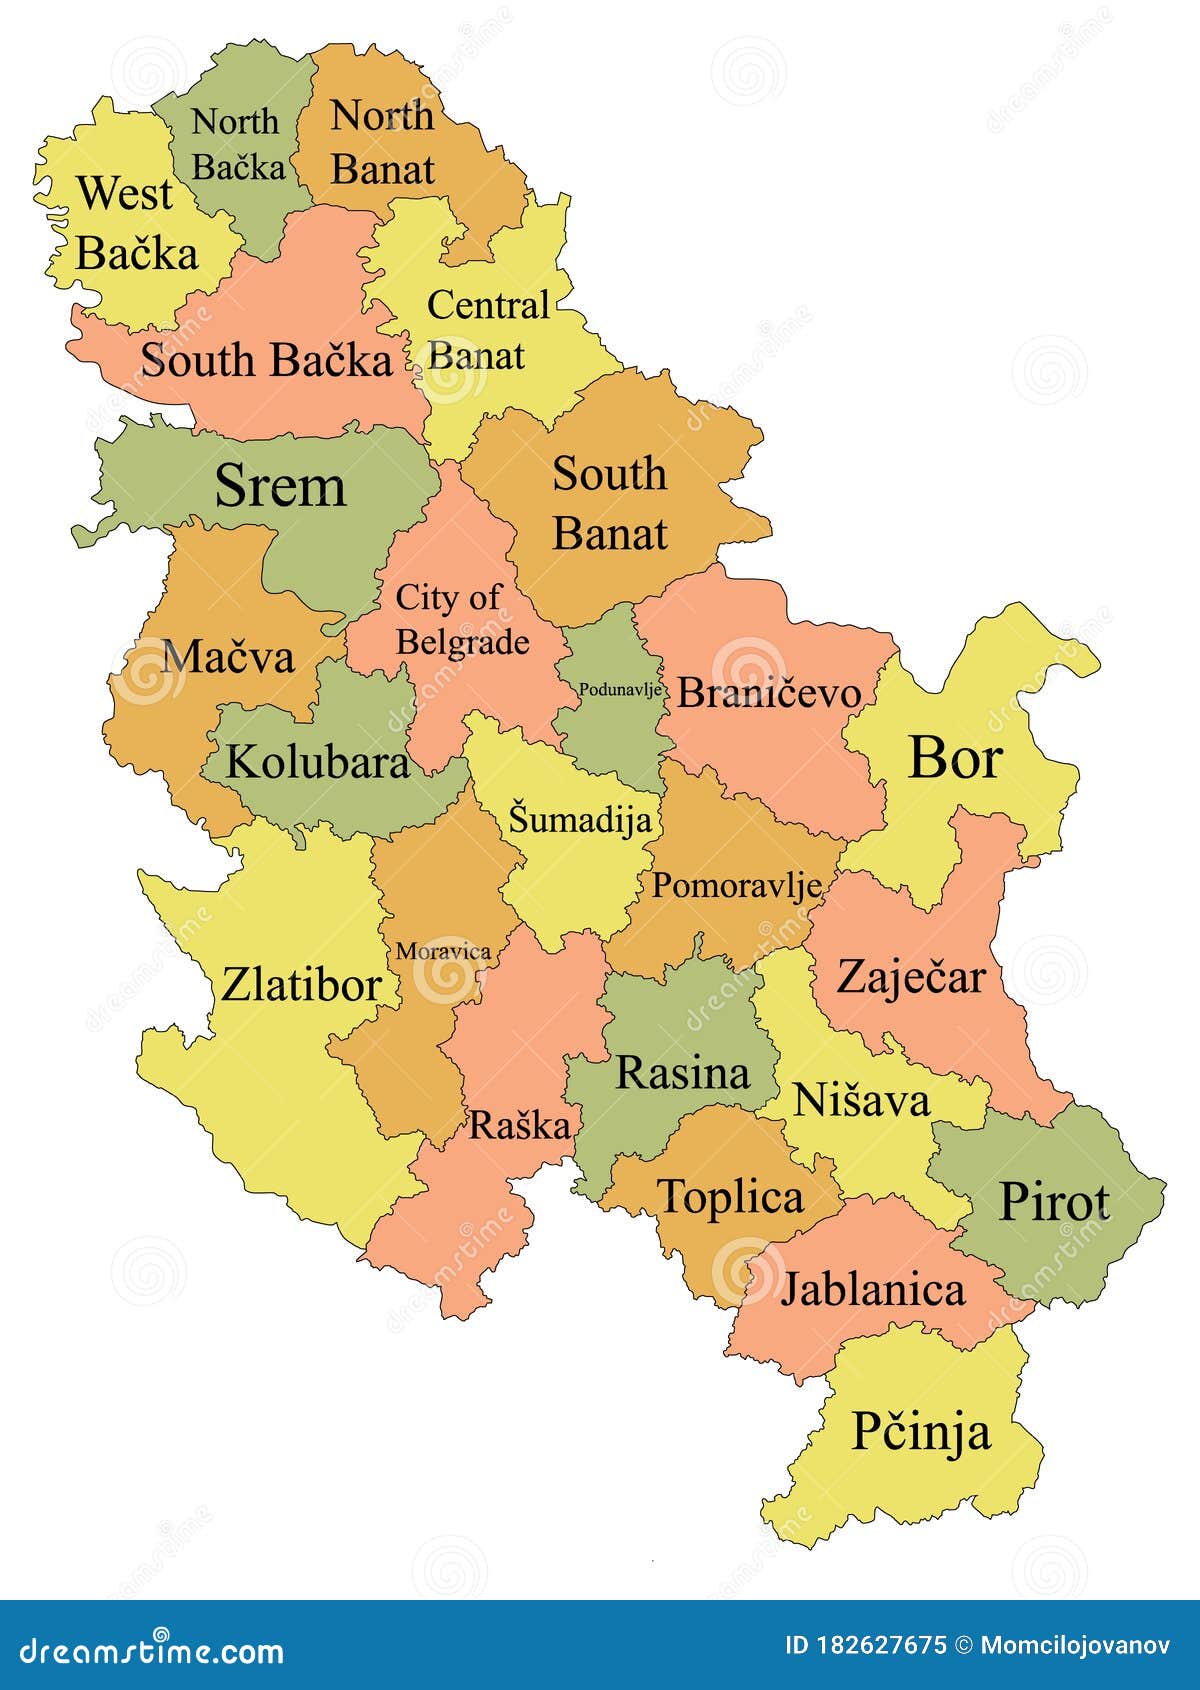 Serbia map